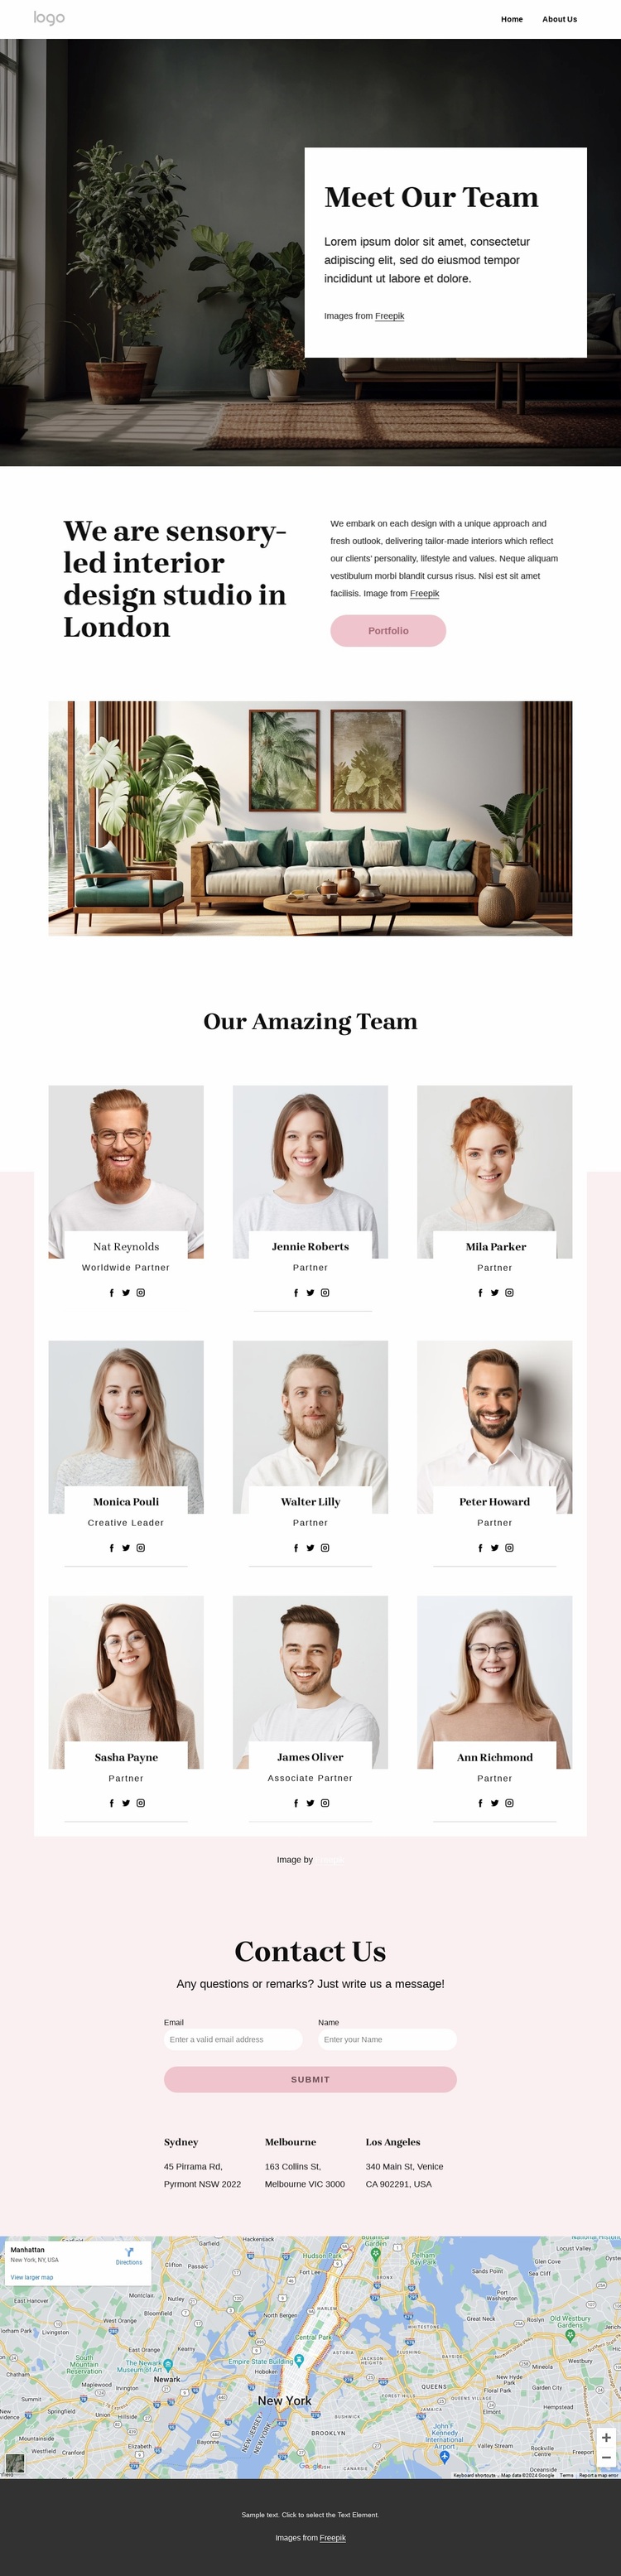 Meet interior studio team Website Design